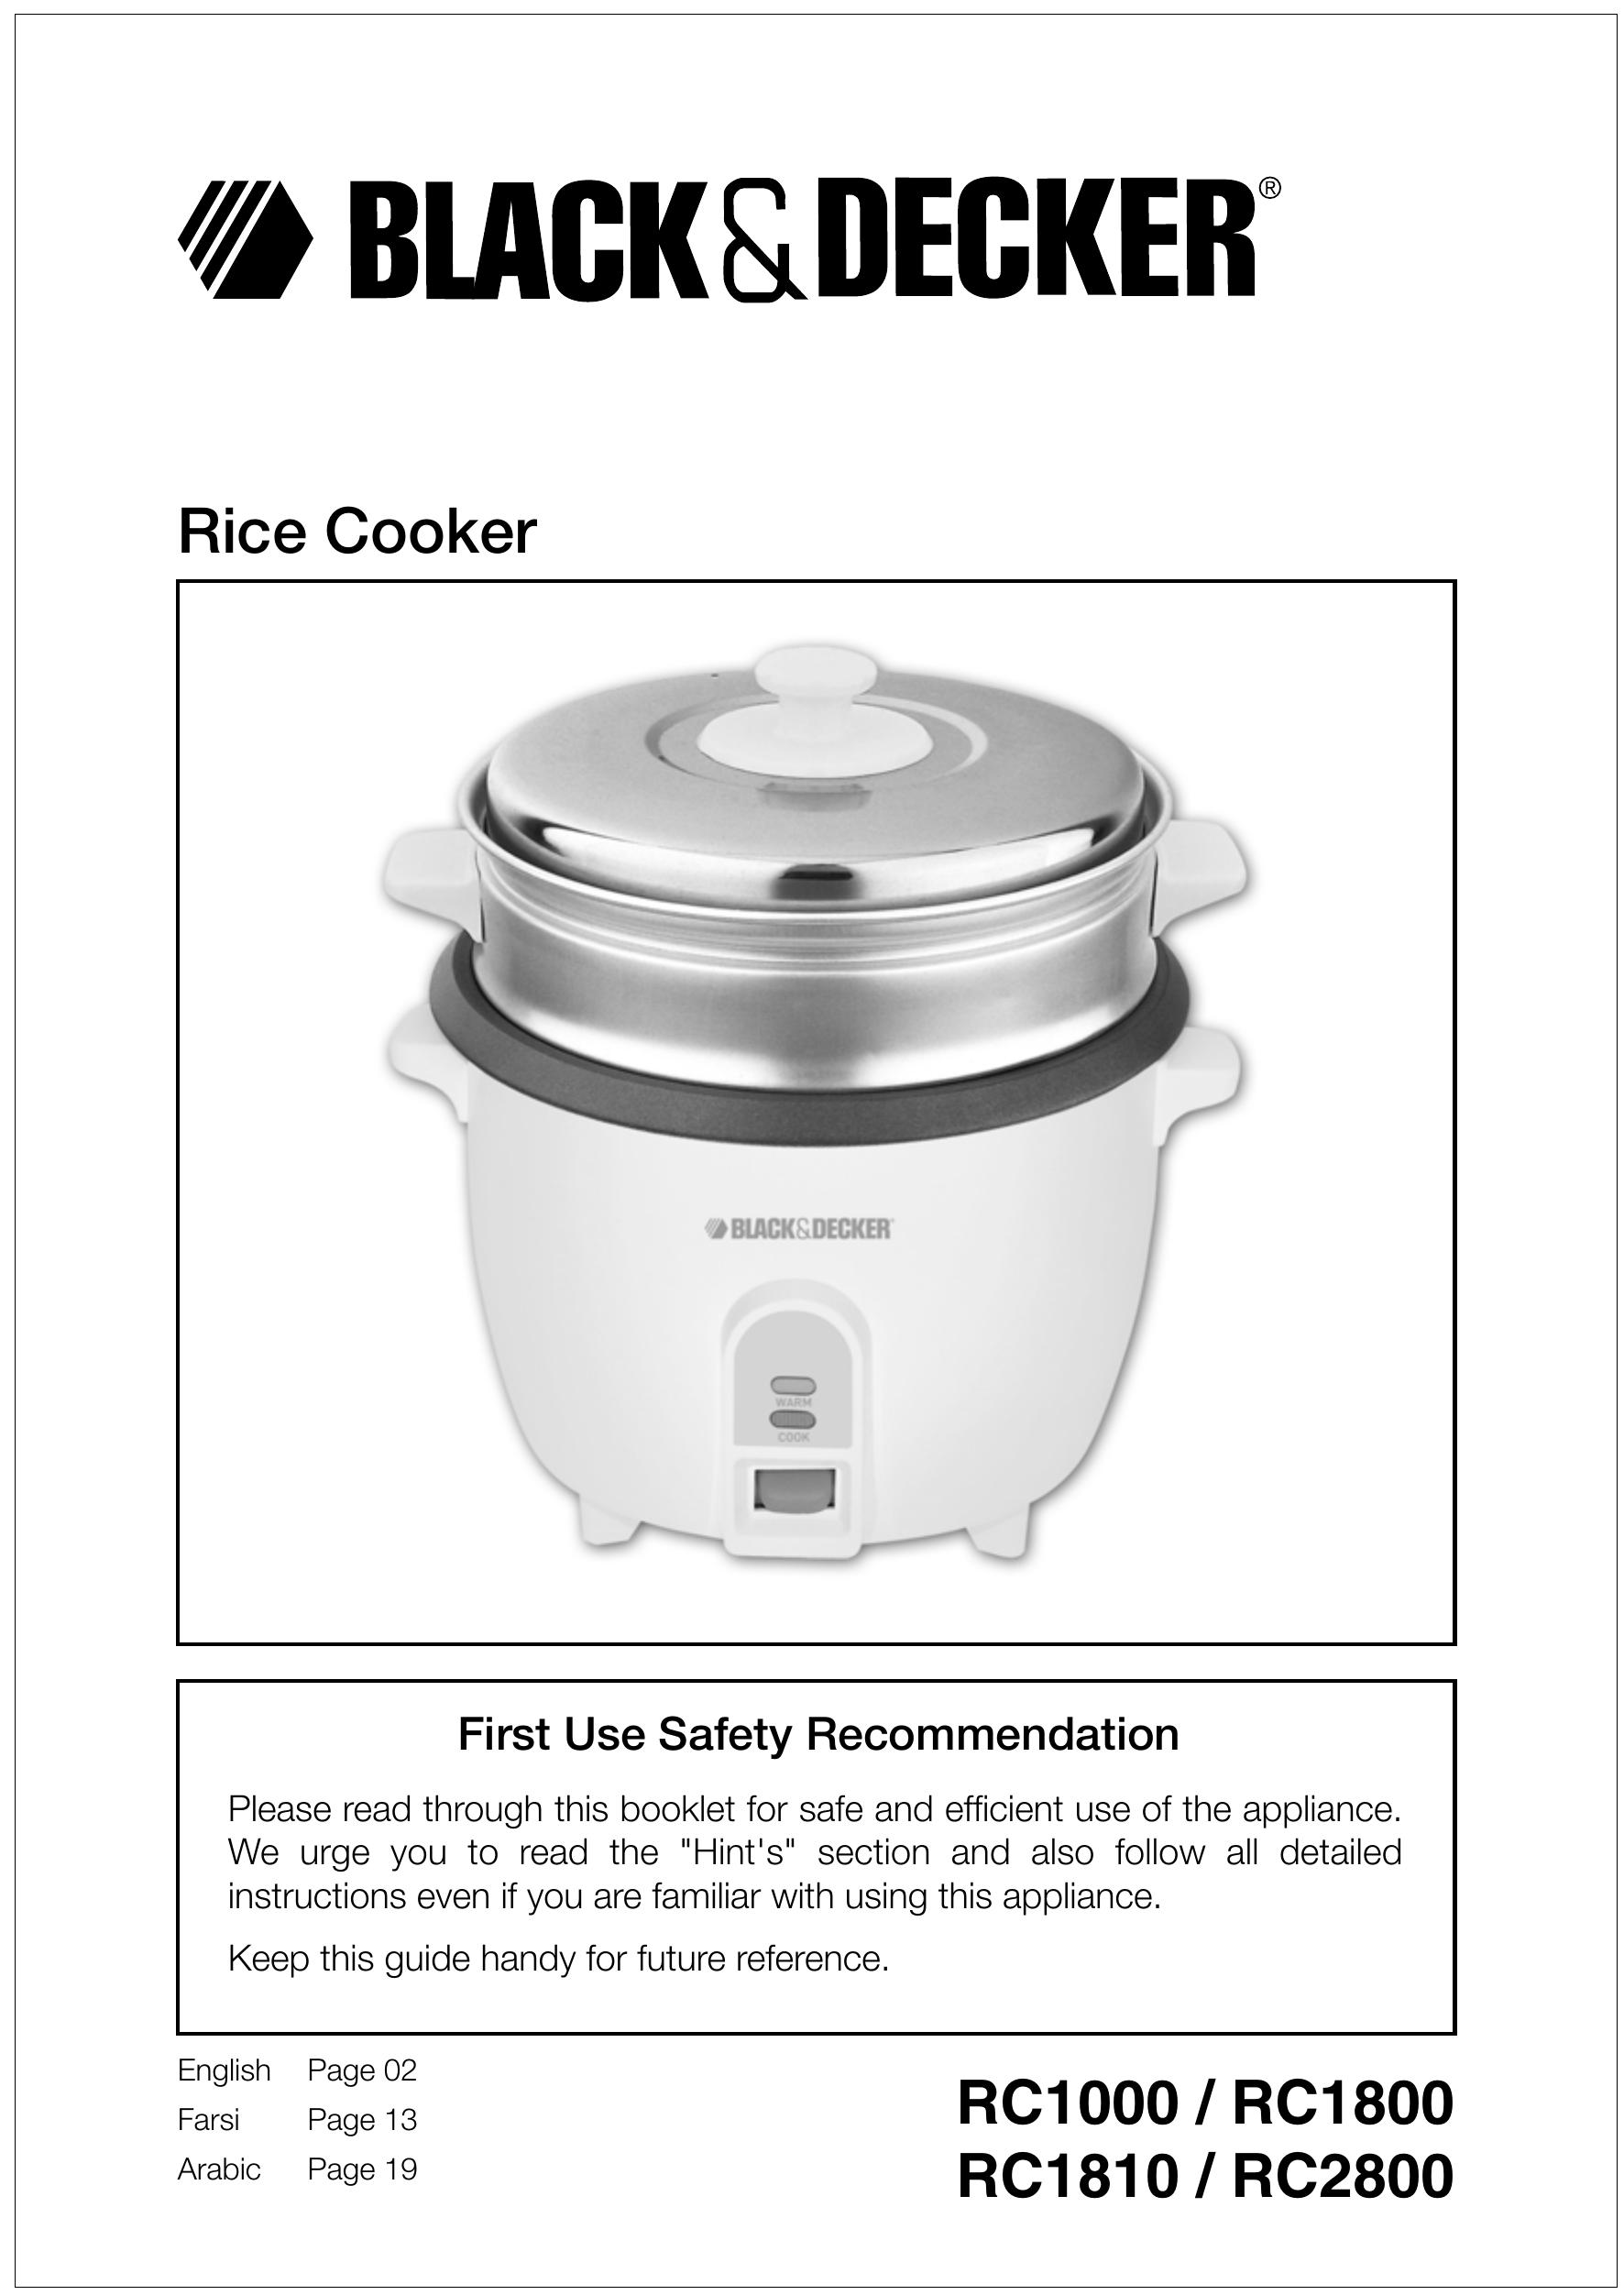 Black & Decker RC2800 Rice Cooker User Manual